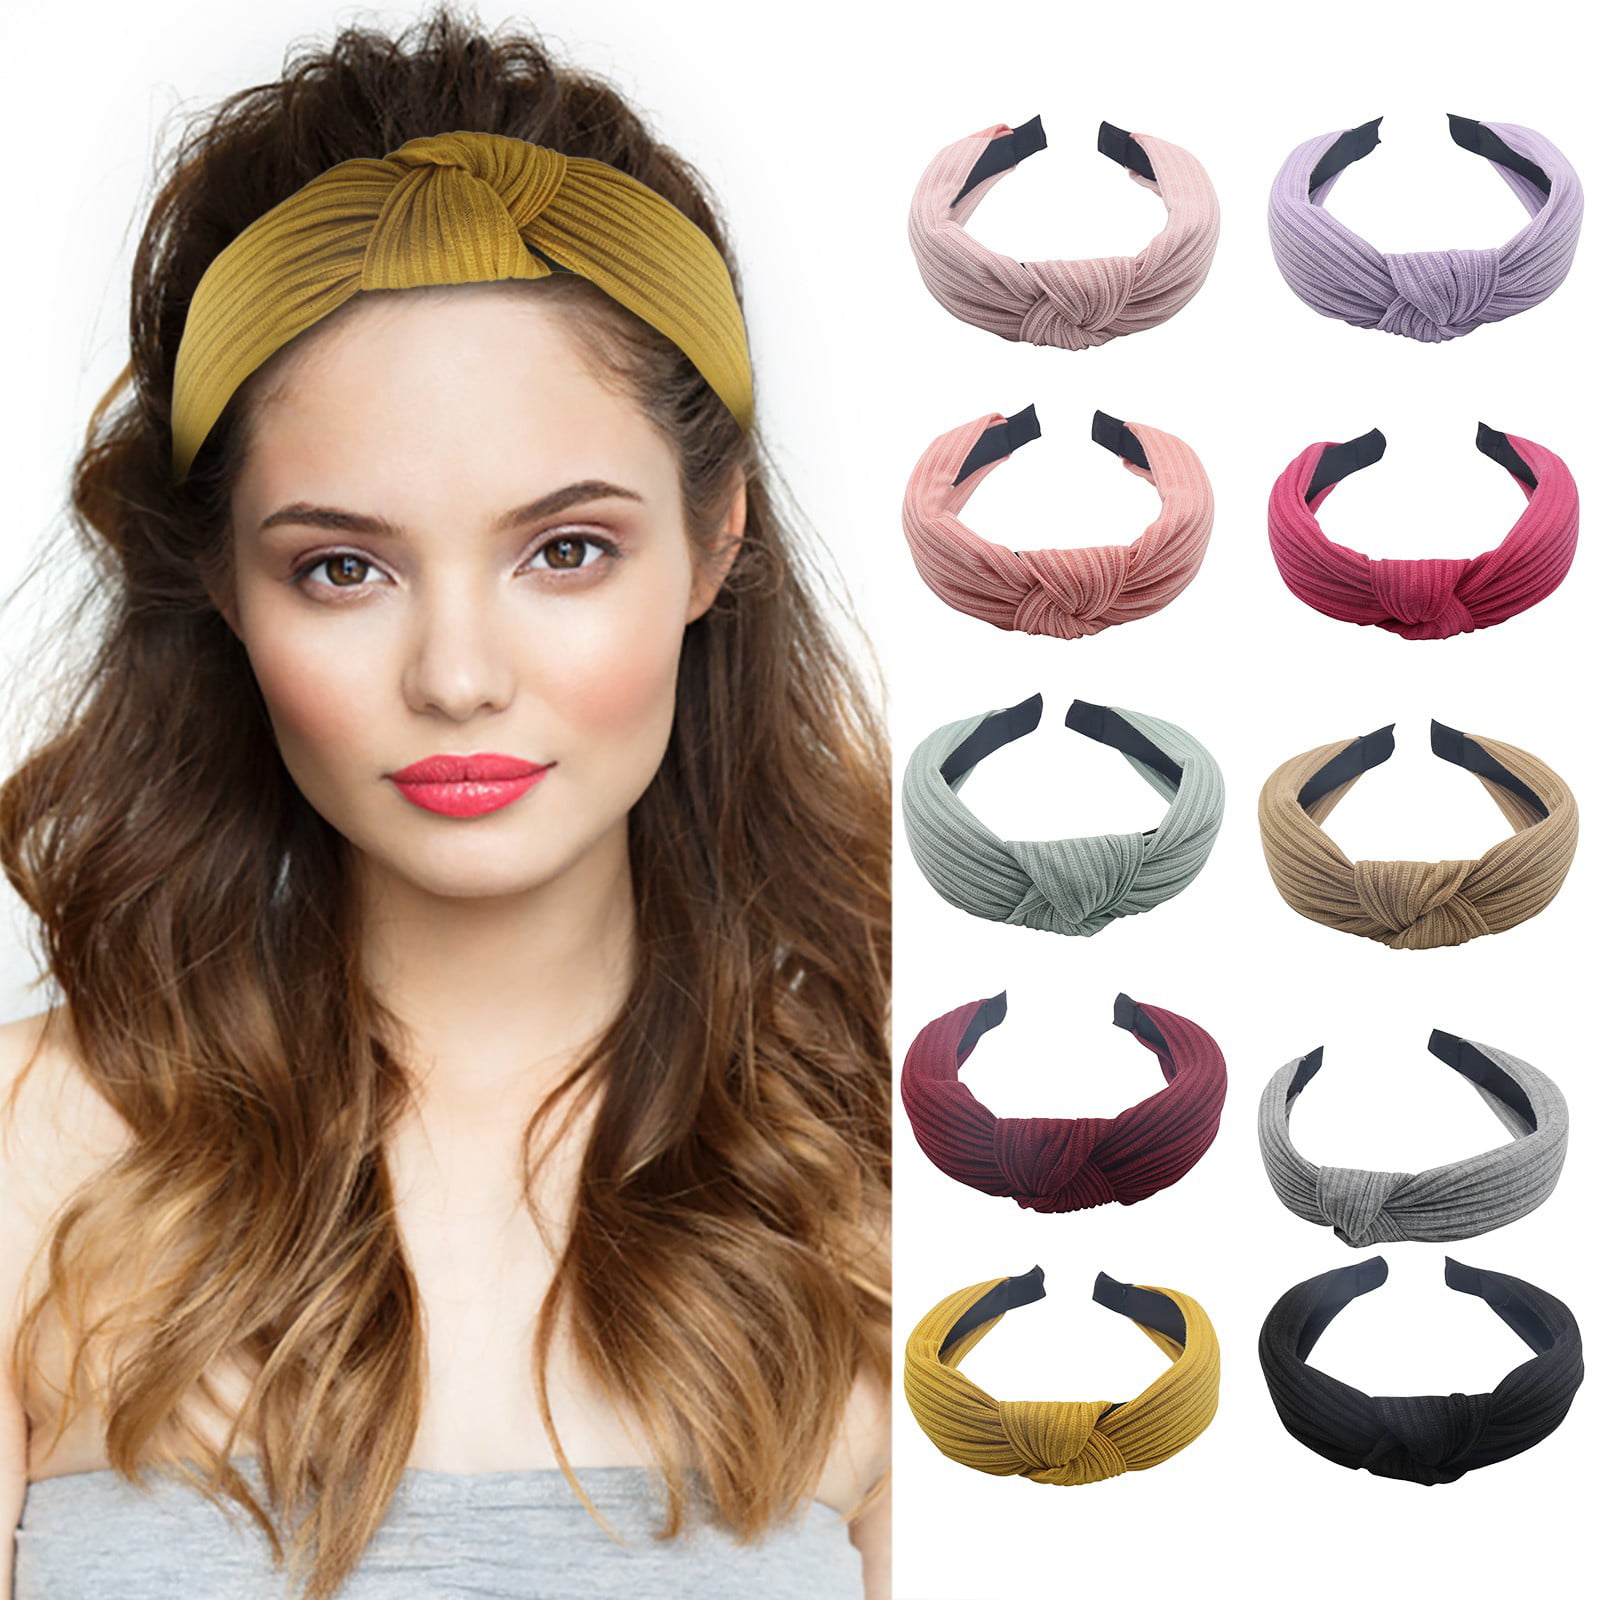 Hair Bands Adjustable Headband Hair Accessories Womens No Slip Headband Gifts for Women Red Skinny Headband Headbands for Girls